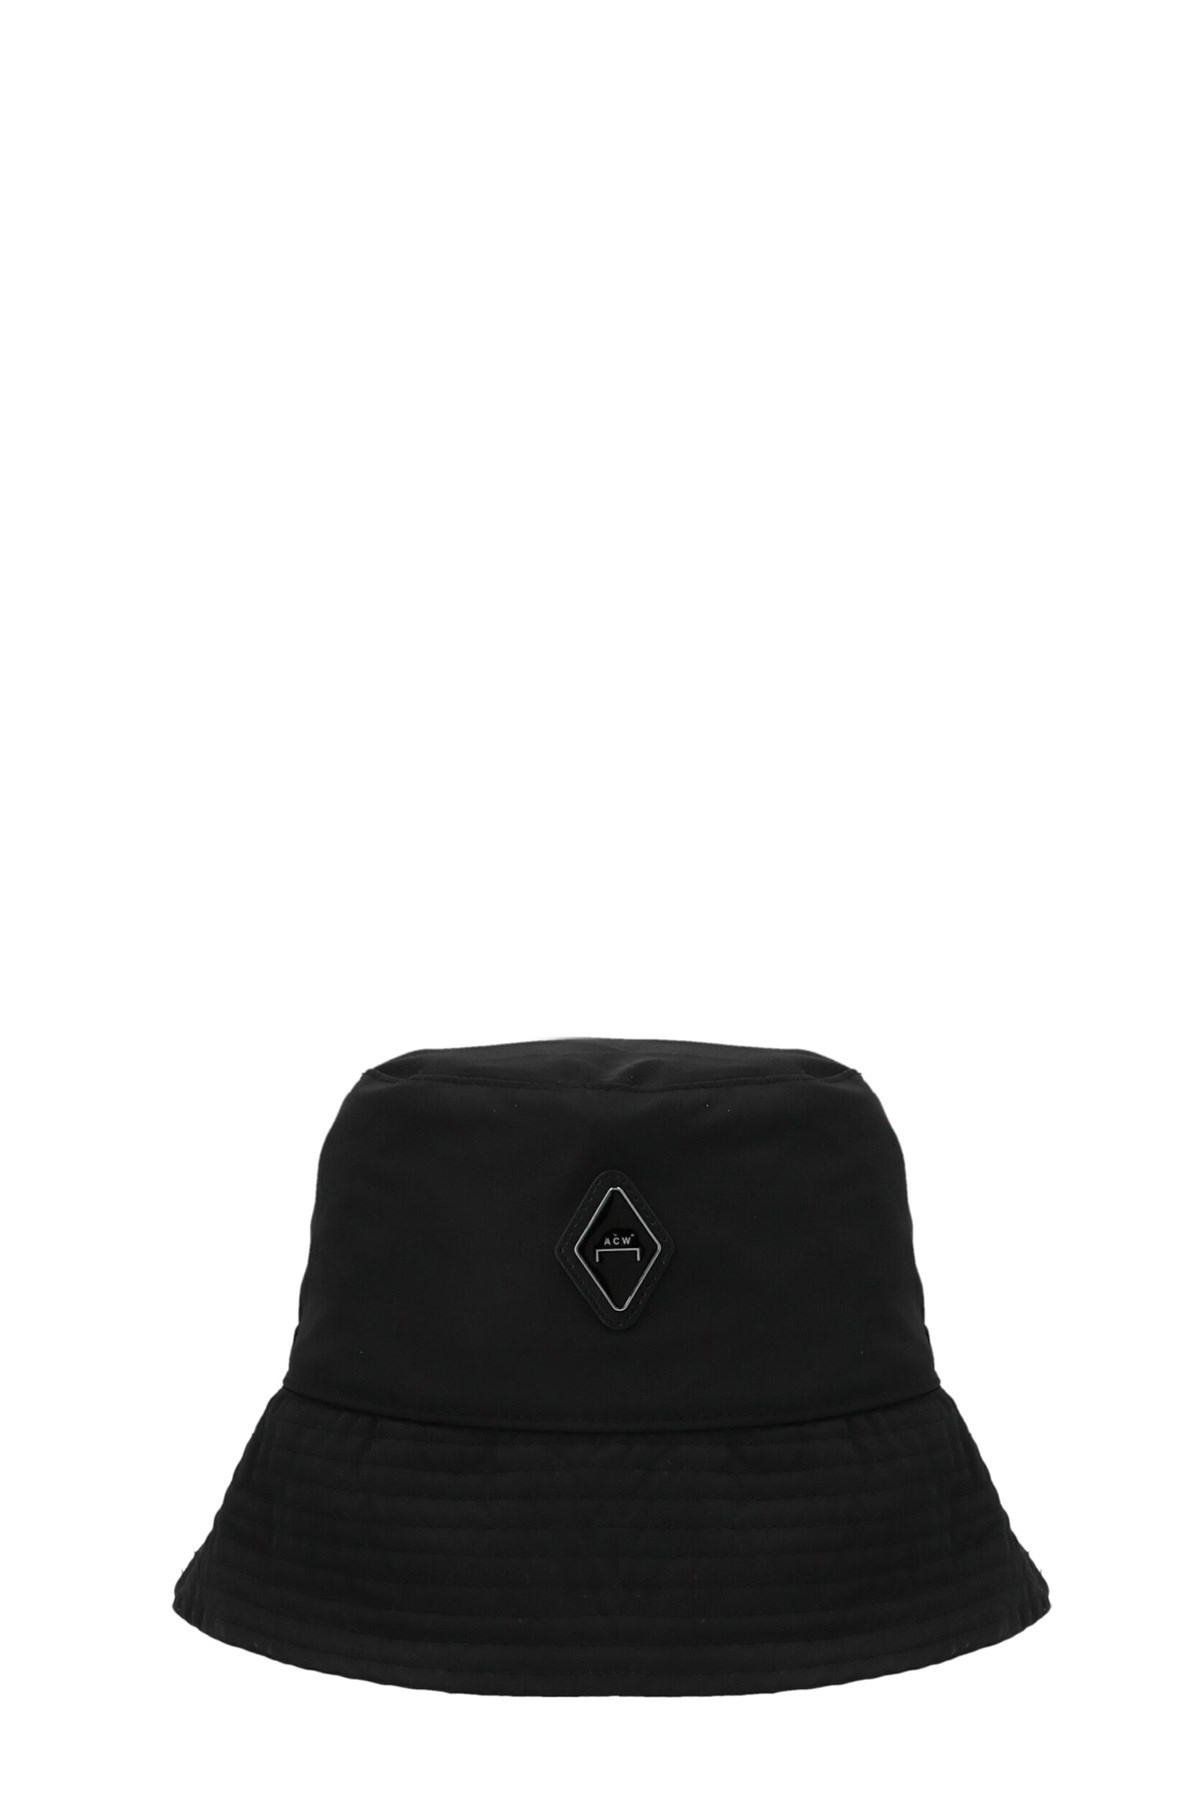 A-COLD-WALL* 'Diamond’ Bucket Hat